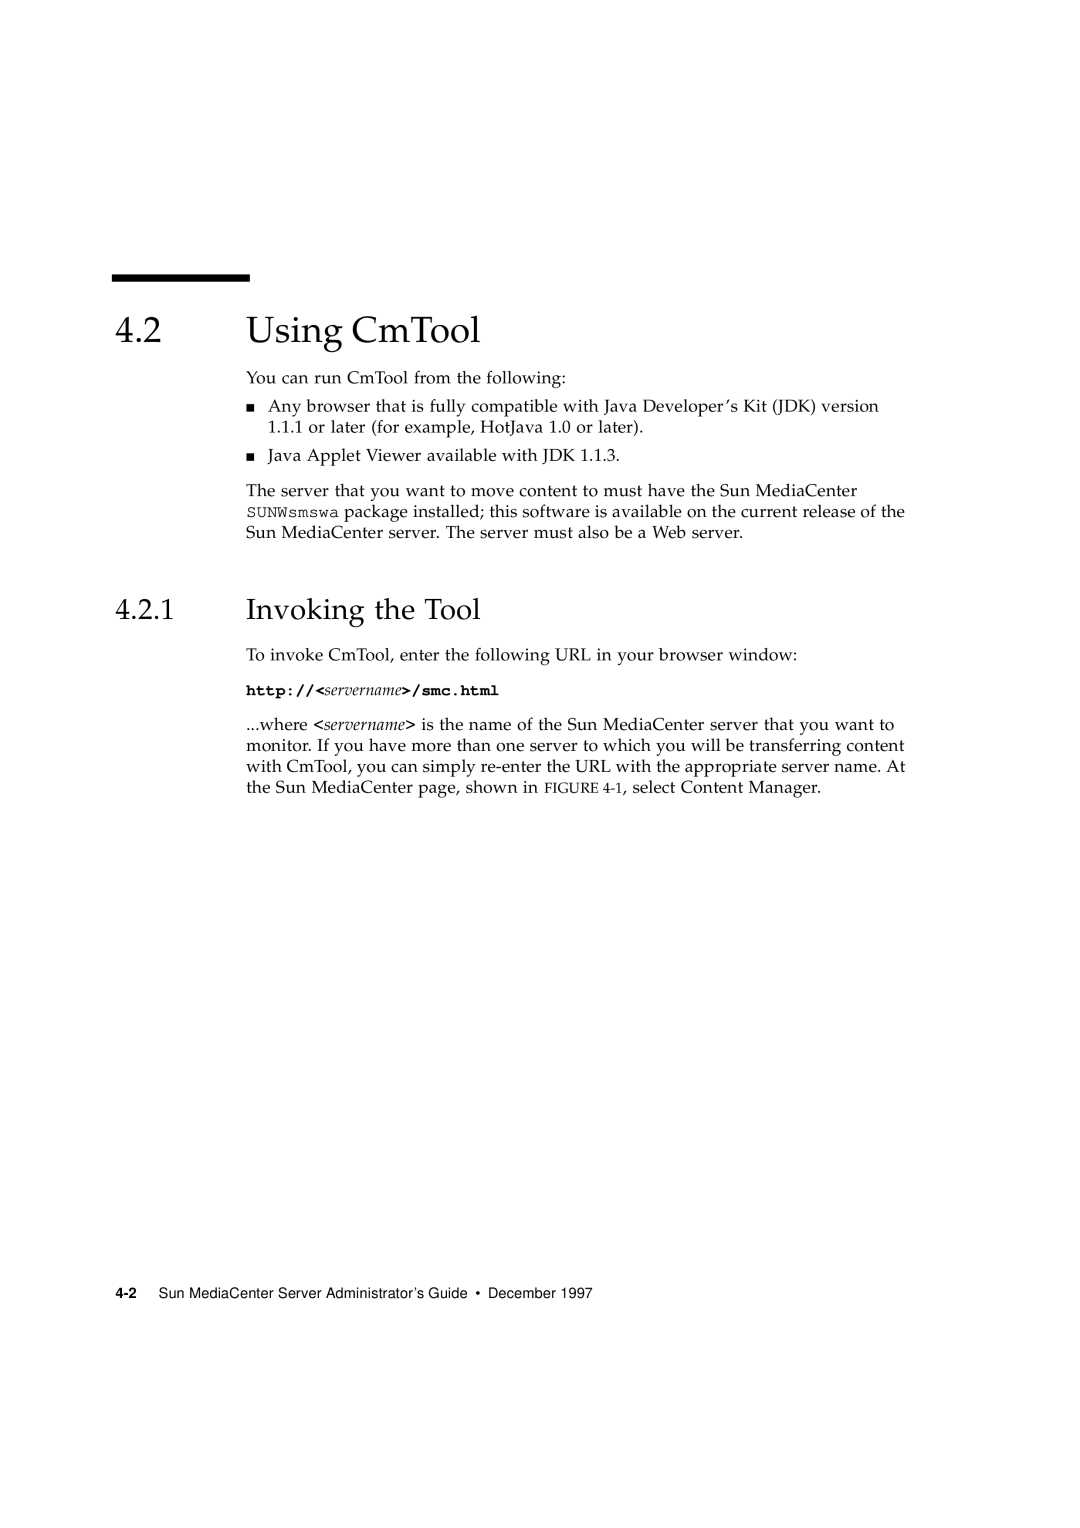 Sun Microsystems 2.1 manual Using CmTool, Invoking the Tool 